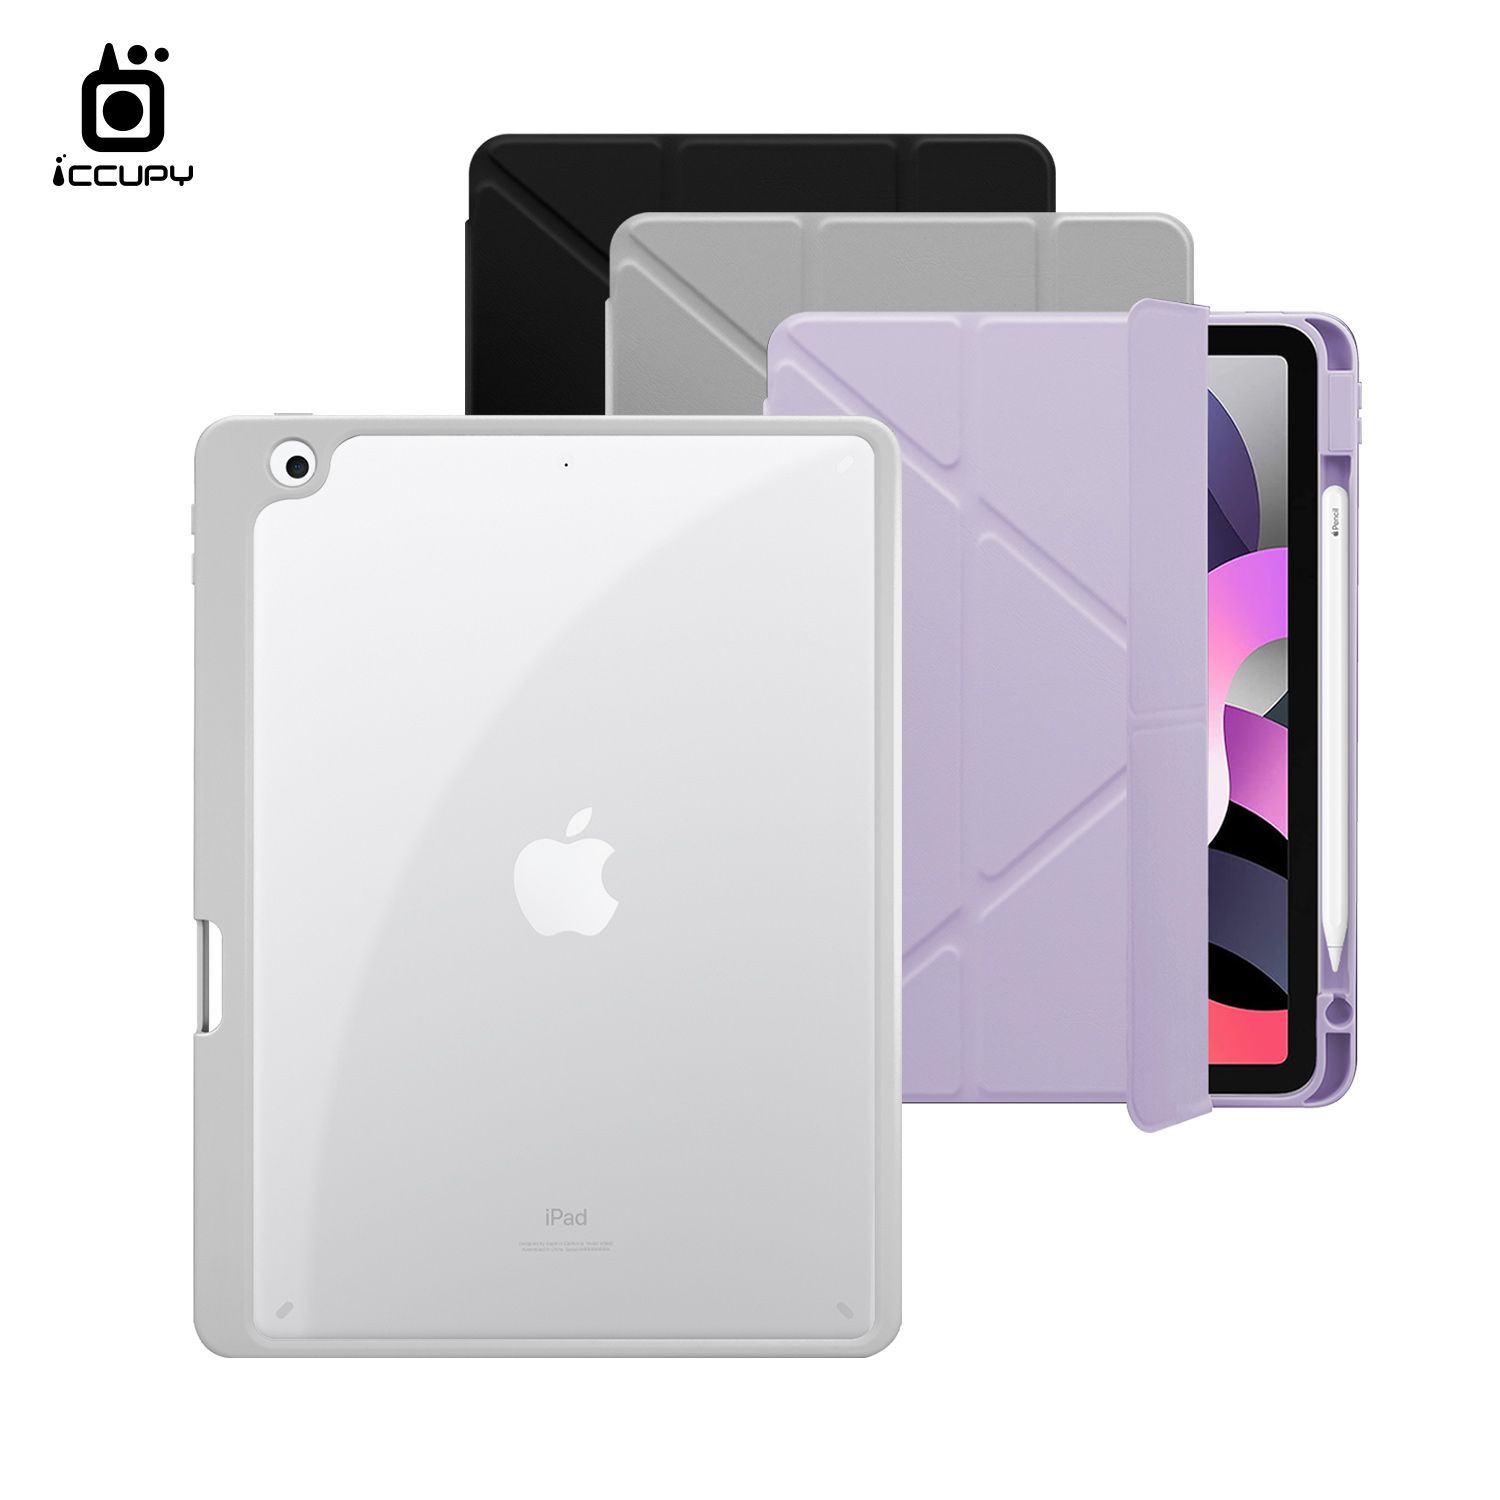 【iCCUPY黑占盾For iPad】黑占盾平板SN系列-卡扣式拆裝兩用(共三色) For iPad 第9代 10.2吋